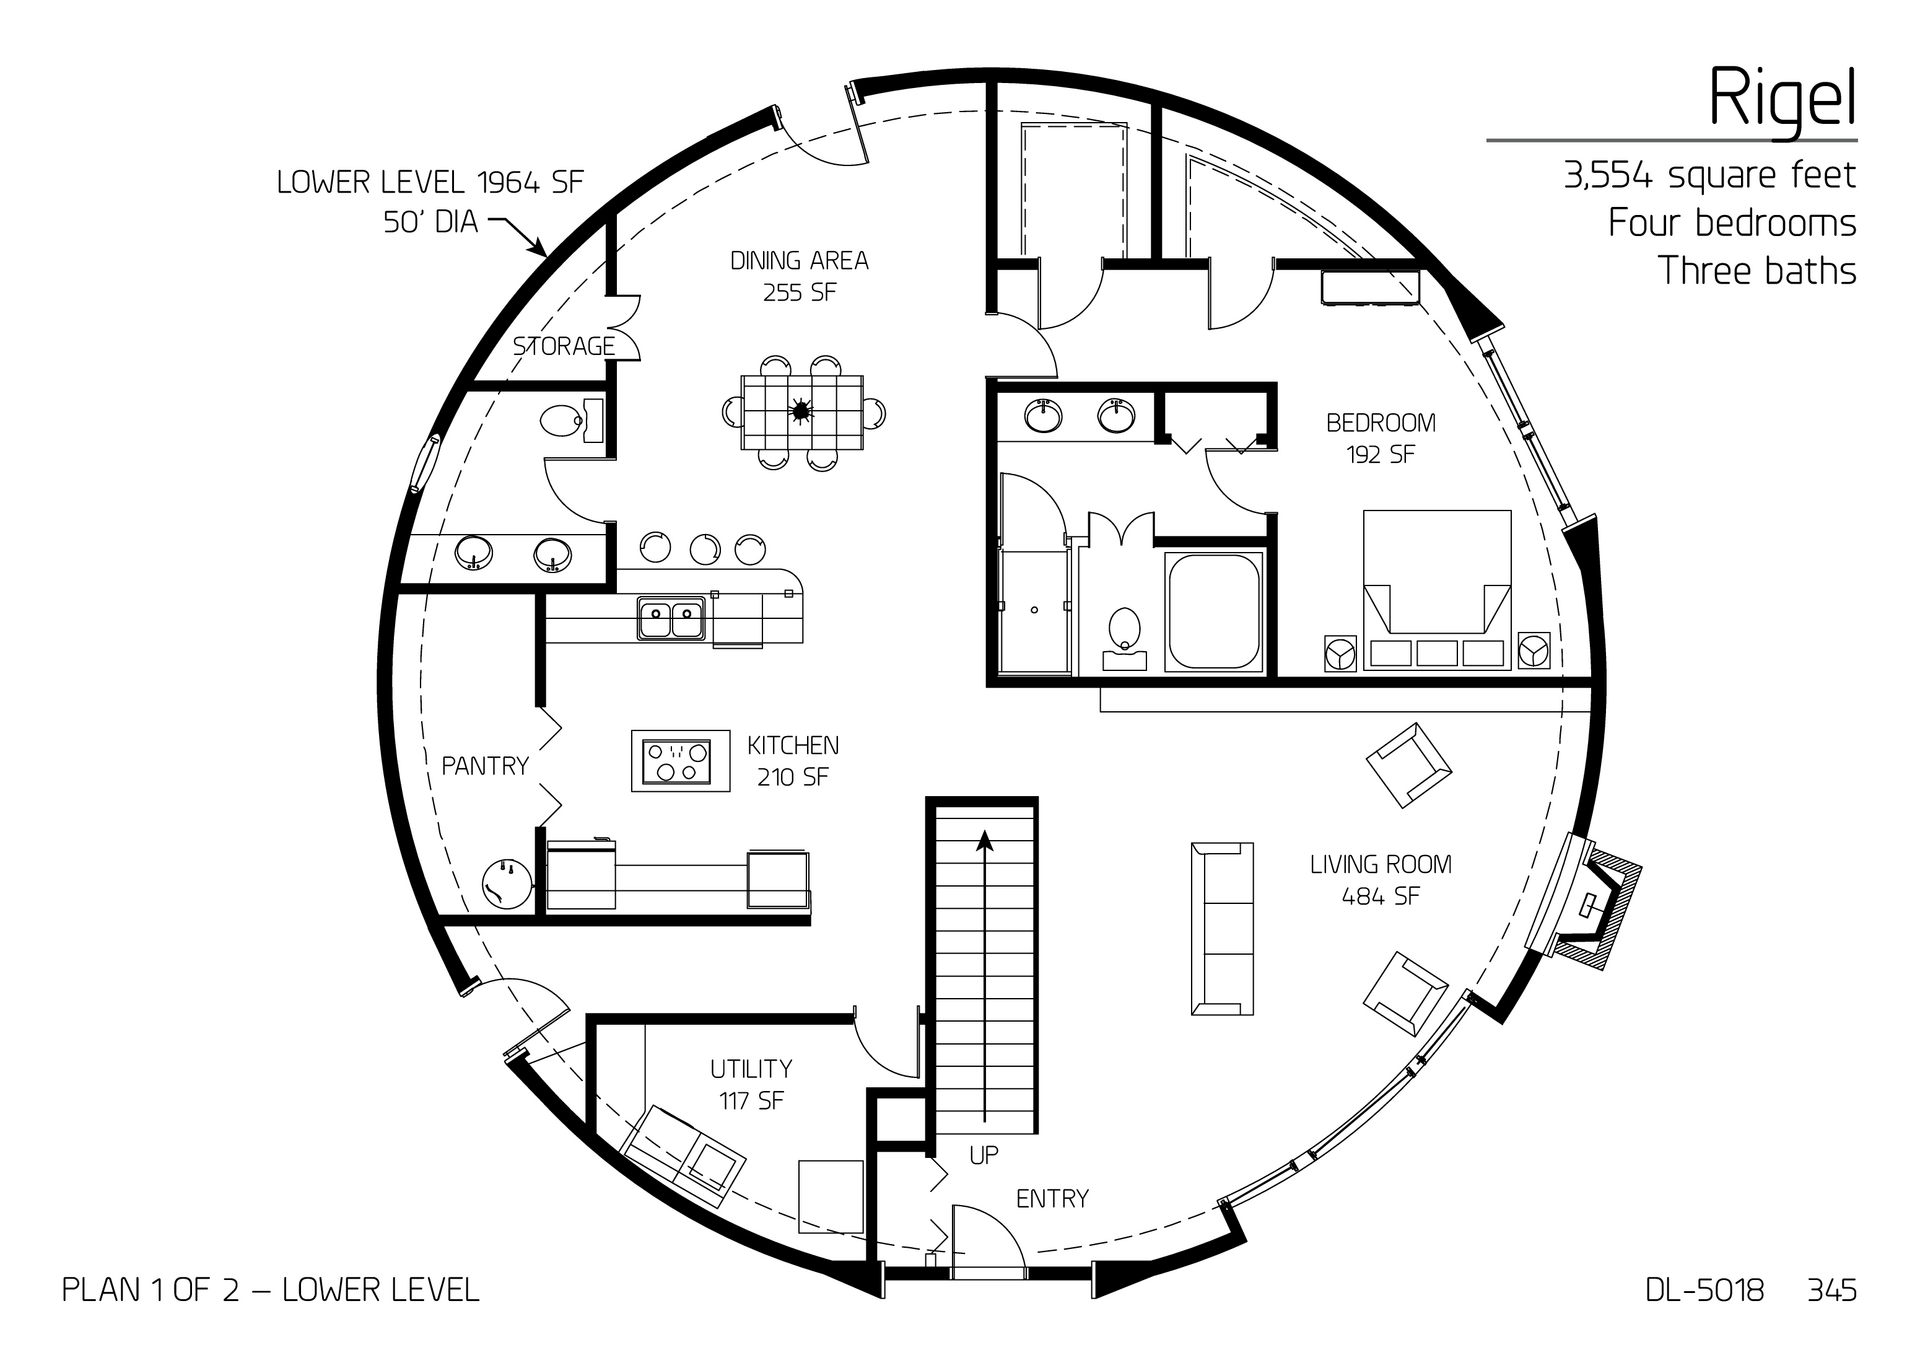 Rigel: Main Floor of a 50' Diameter, 3,554 SF, Four-Bedrooms, Three-Baths Floor Plan.